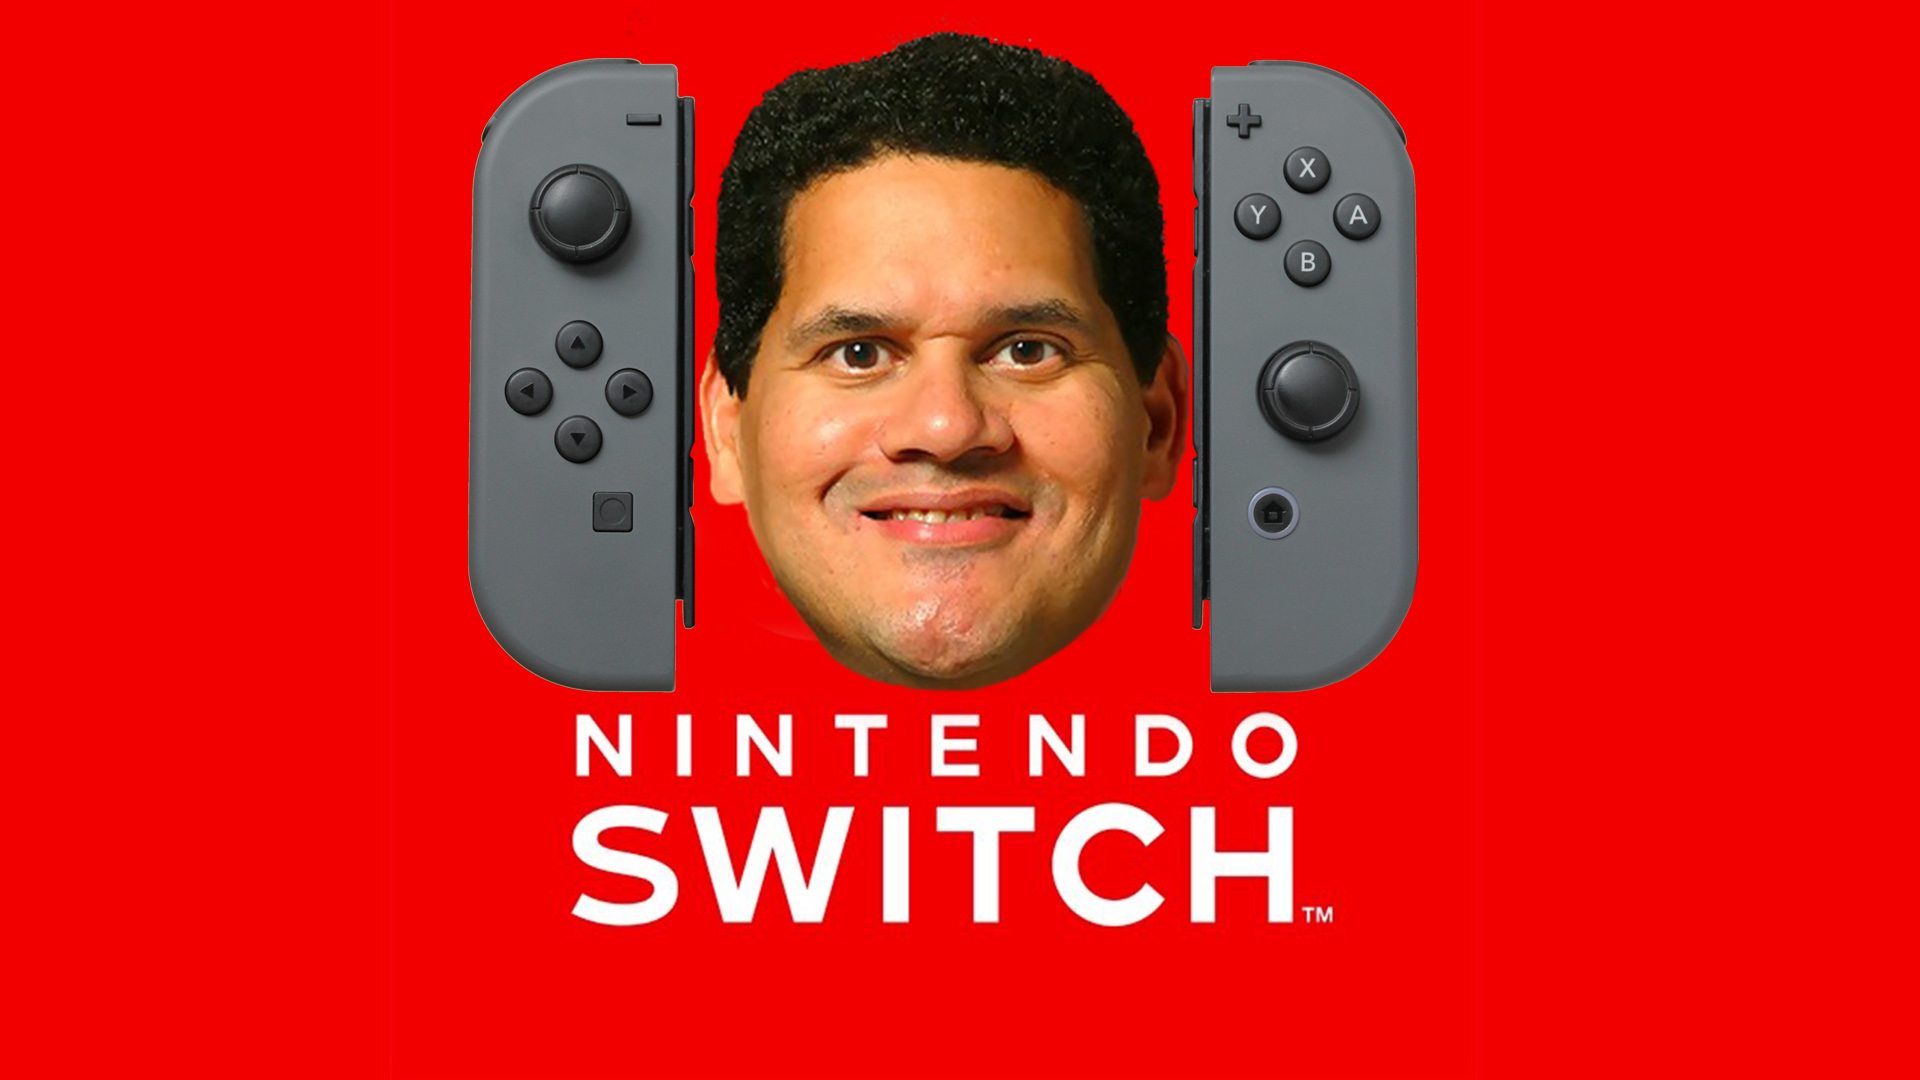 Nintendo switch reggie